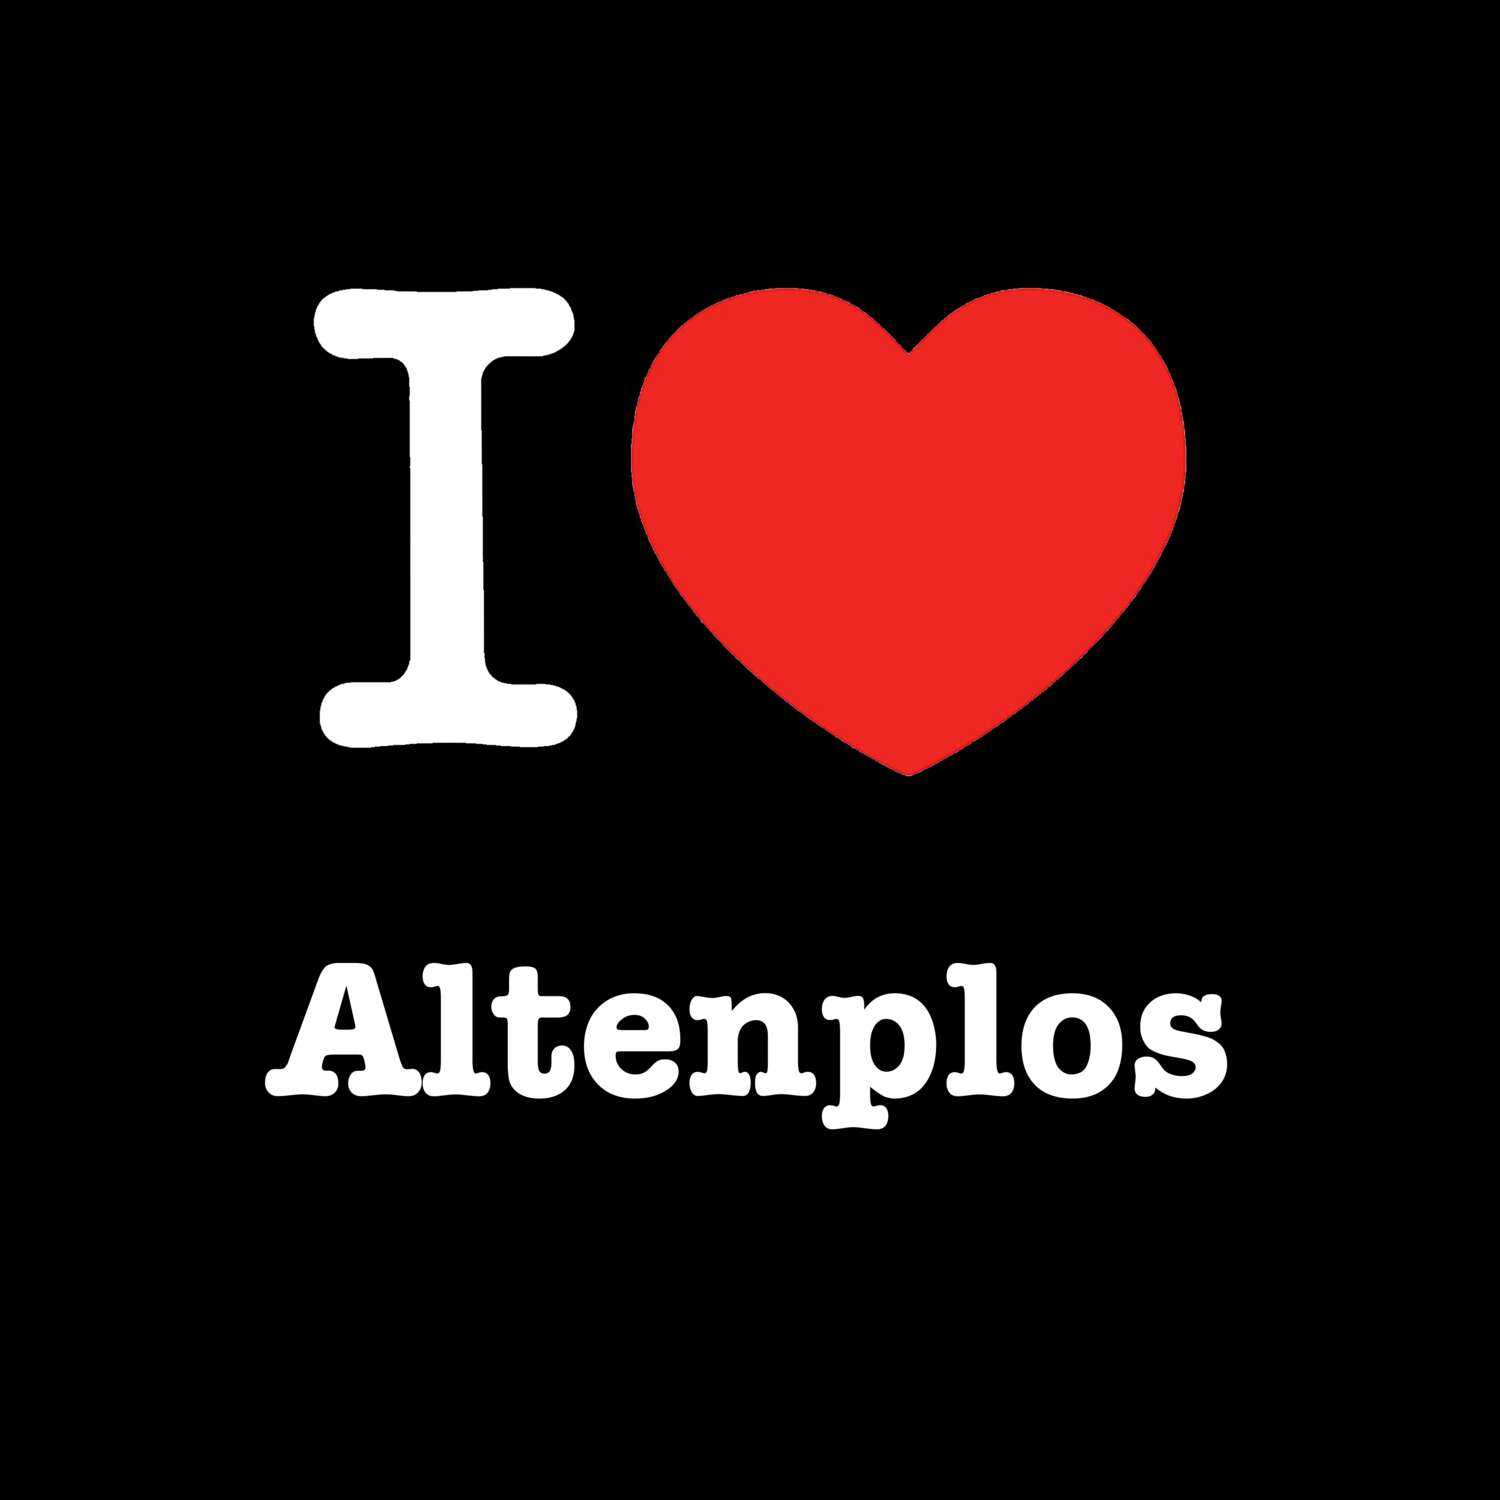 Altenplos T-Shirt »I love«